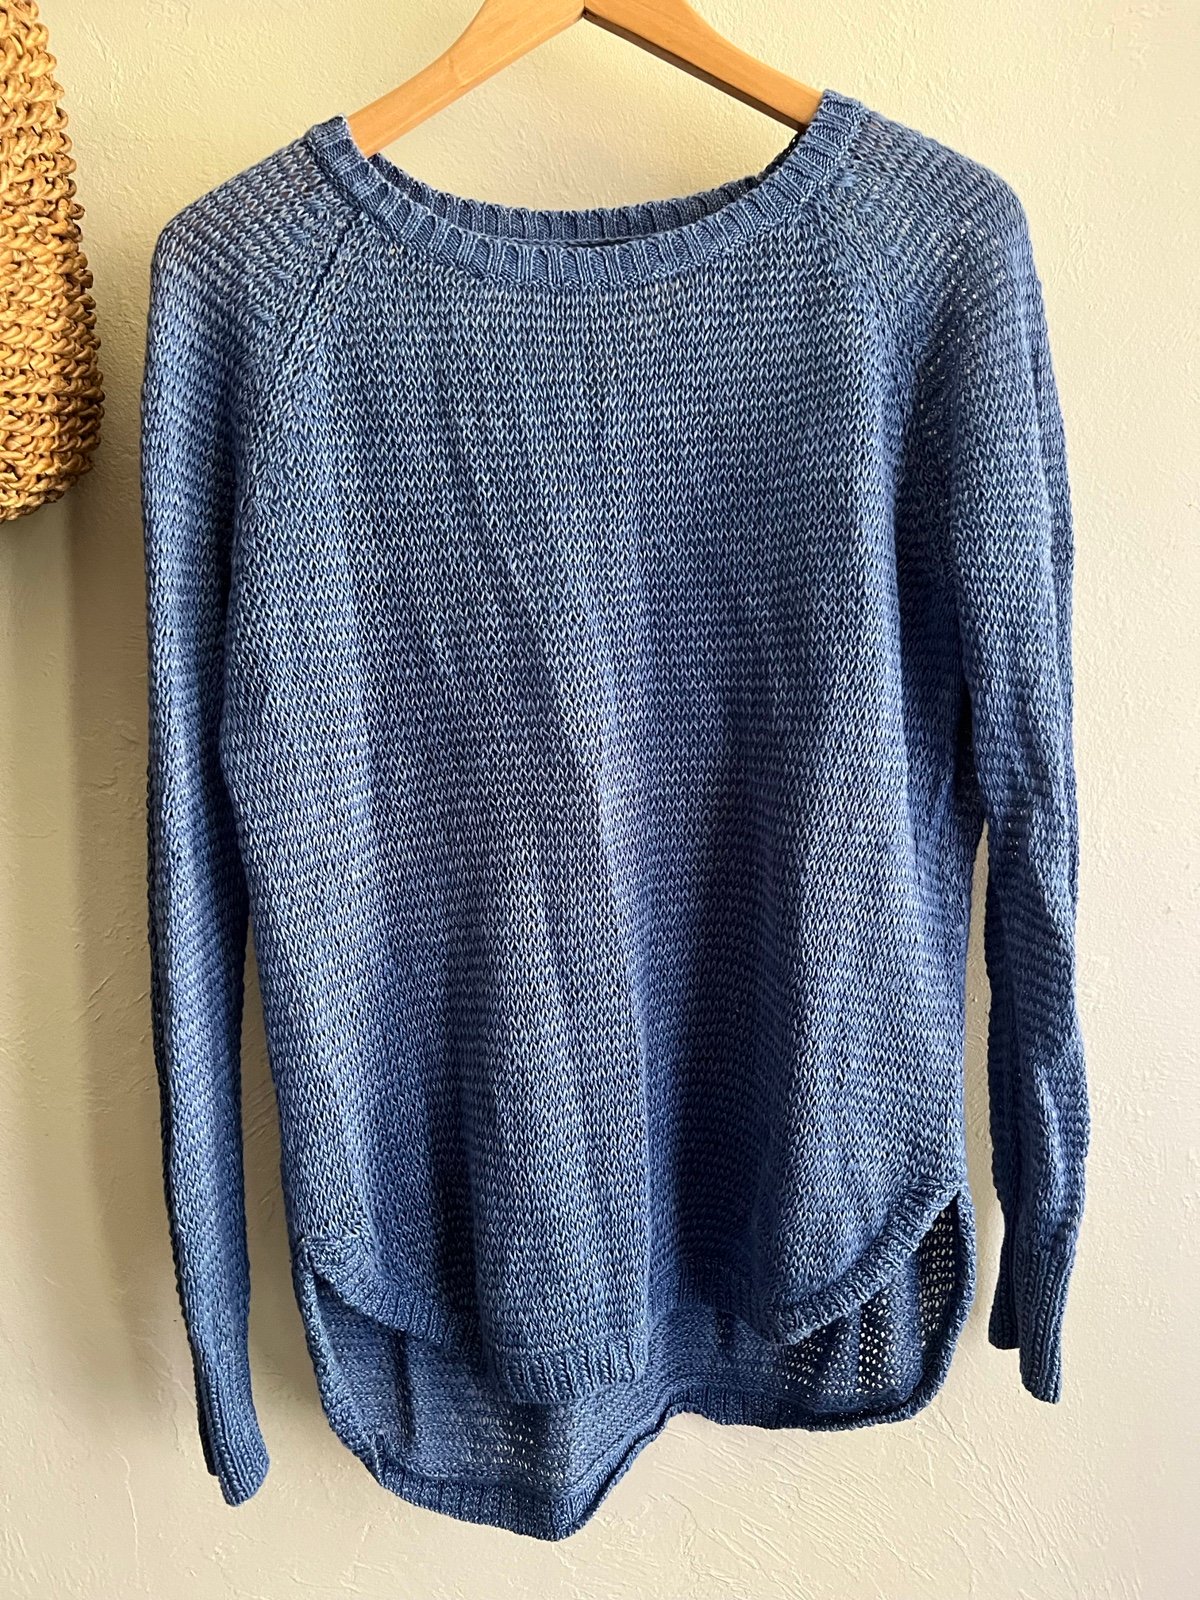 Promotions  Ralph Lauren Polo Women’s Knit Sweater Small pp88Jh9Ne Great